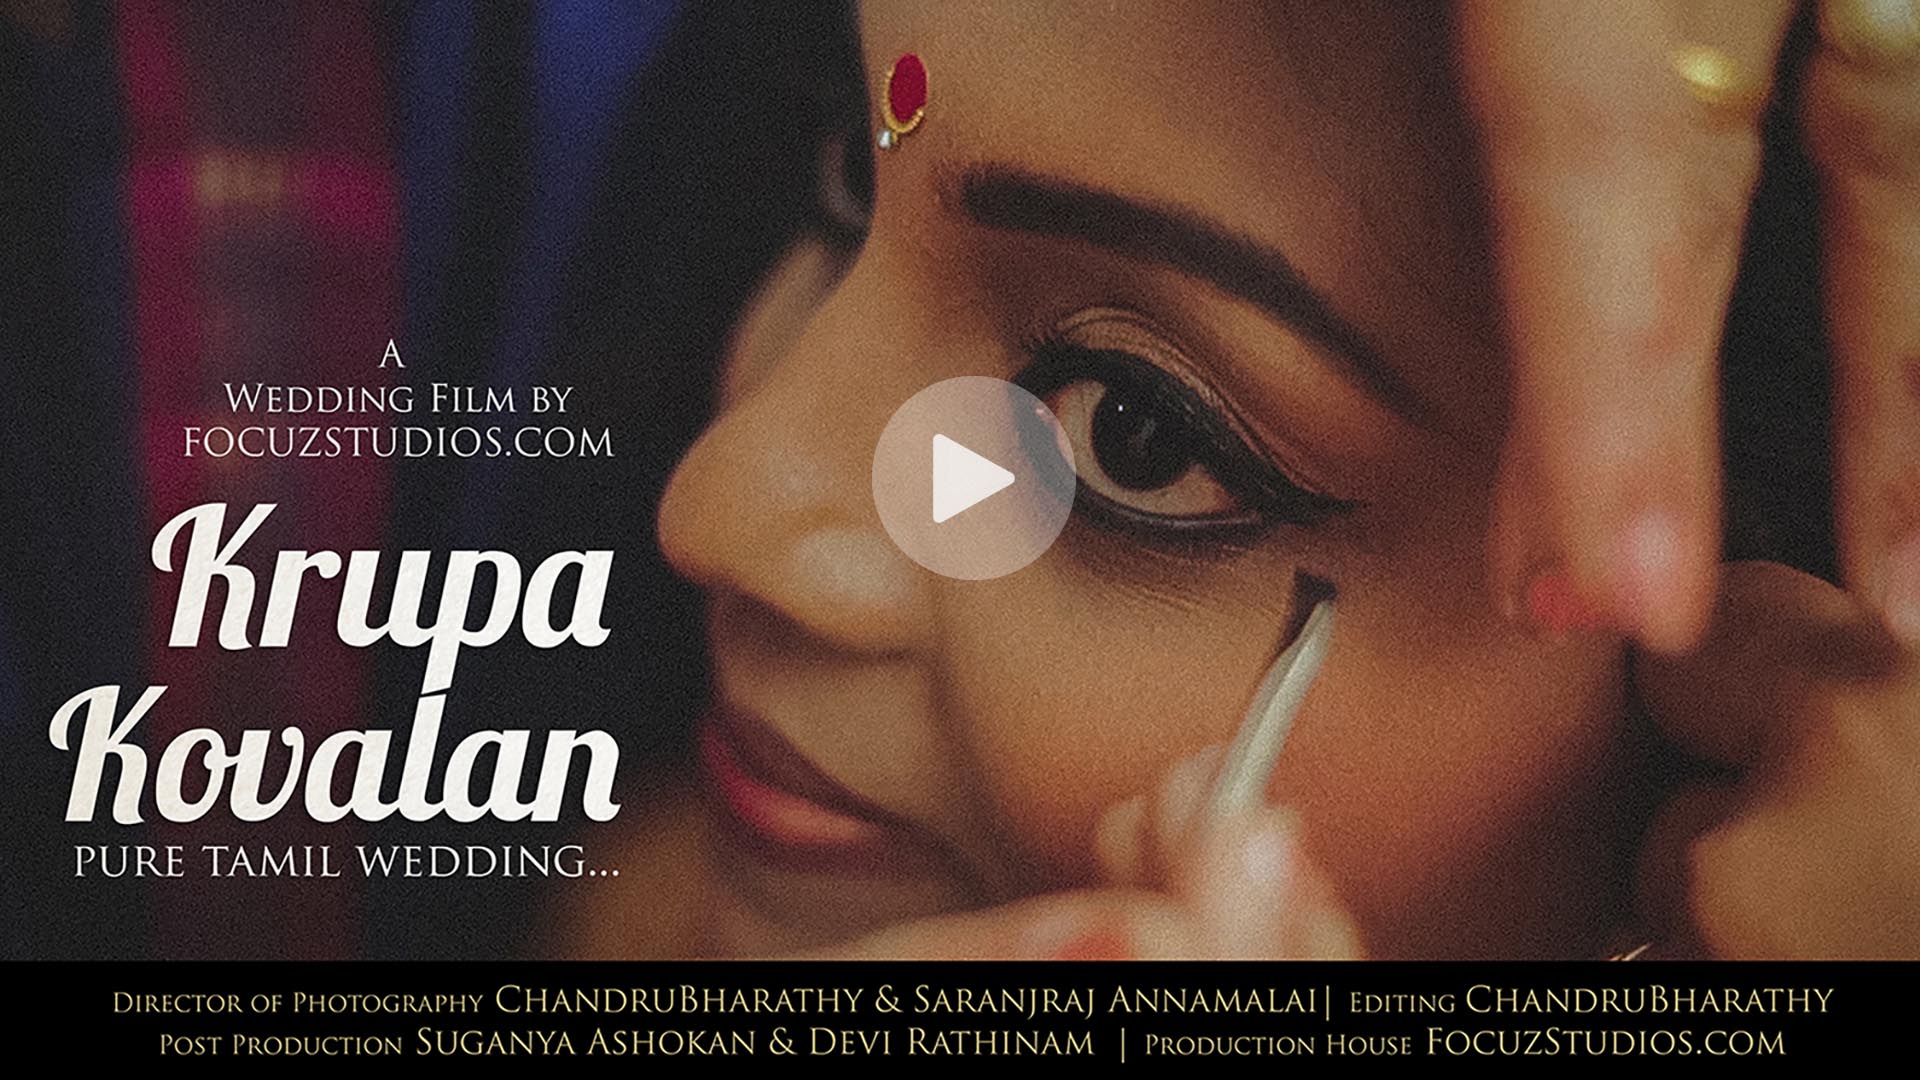 Tamil Wedding Film Video KRUPA and KOVALAN – Tamilnadu